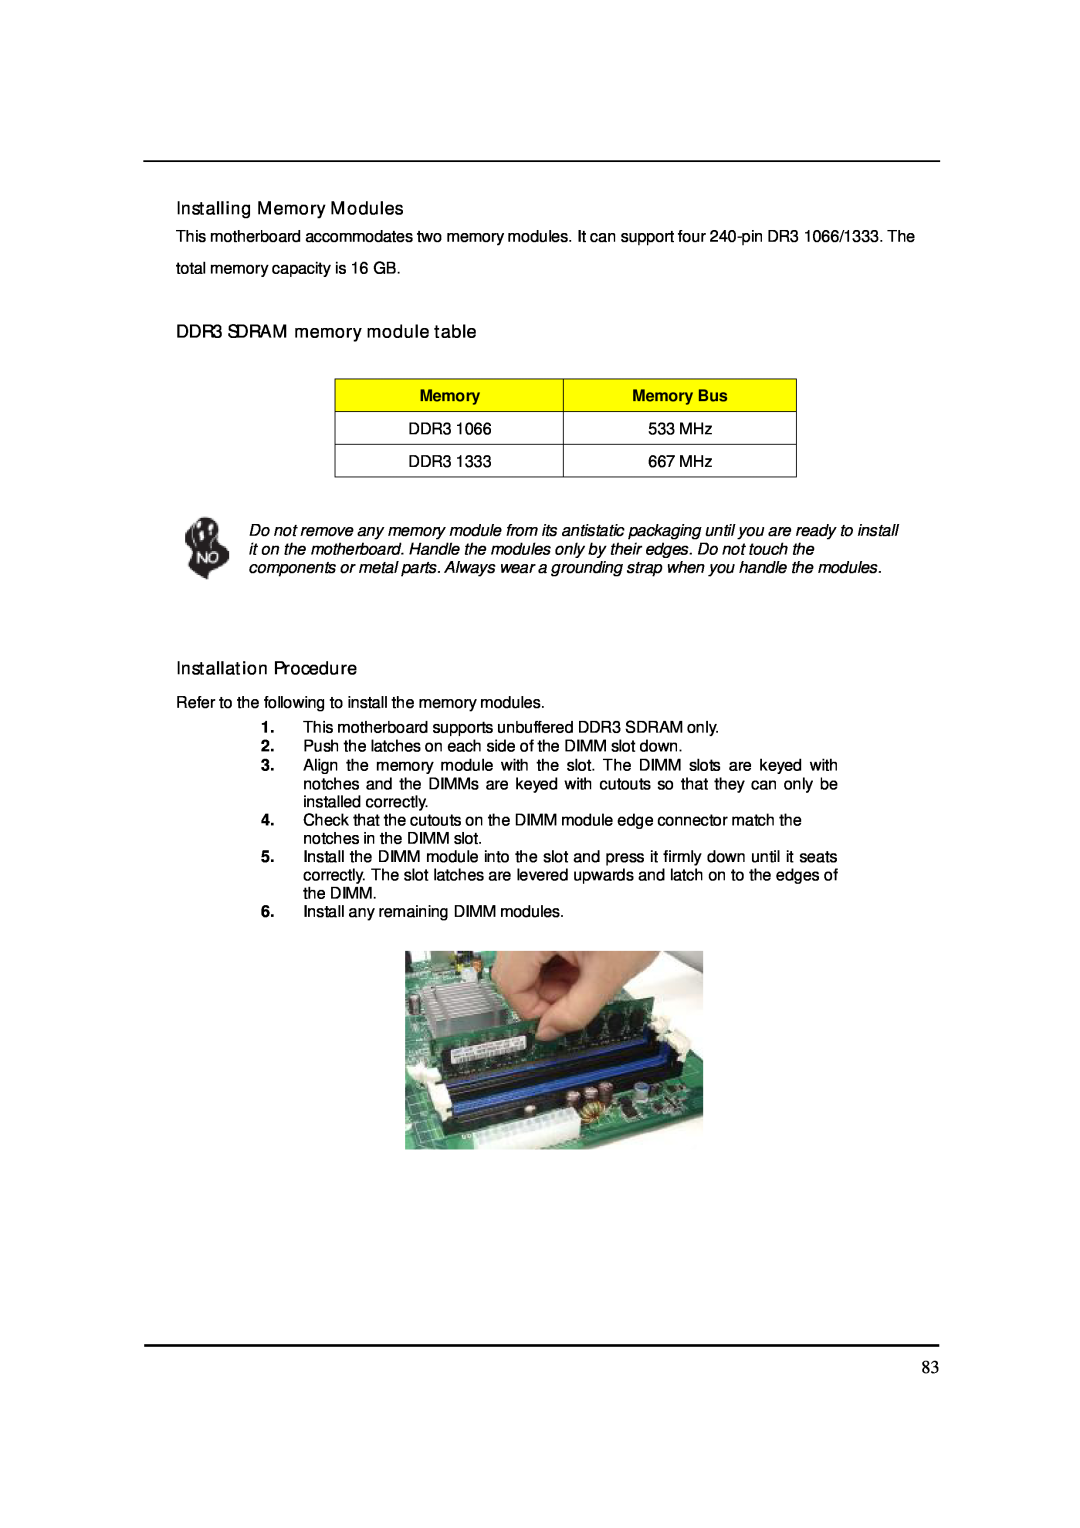 Acer S3811 manual Installing Memory Modules, DDR3 SDRAM memory module table, Installation Procedure, Memory Bus 